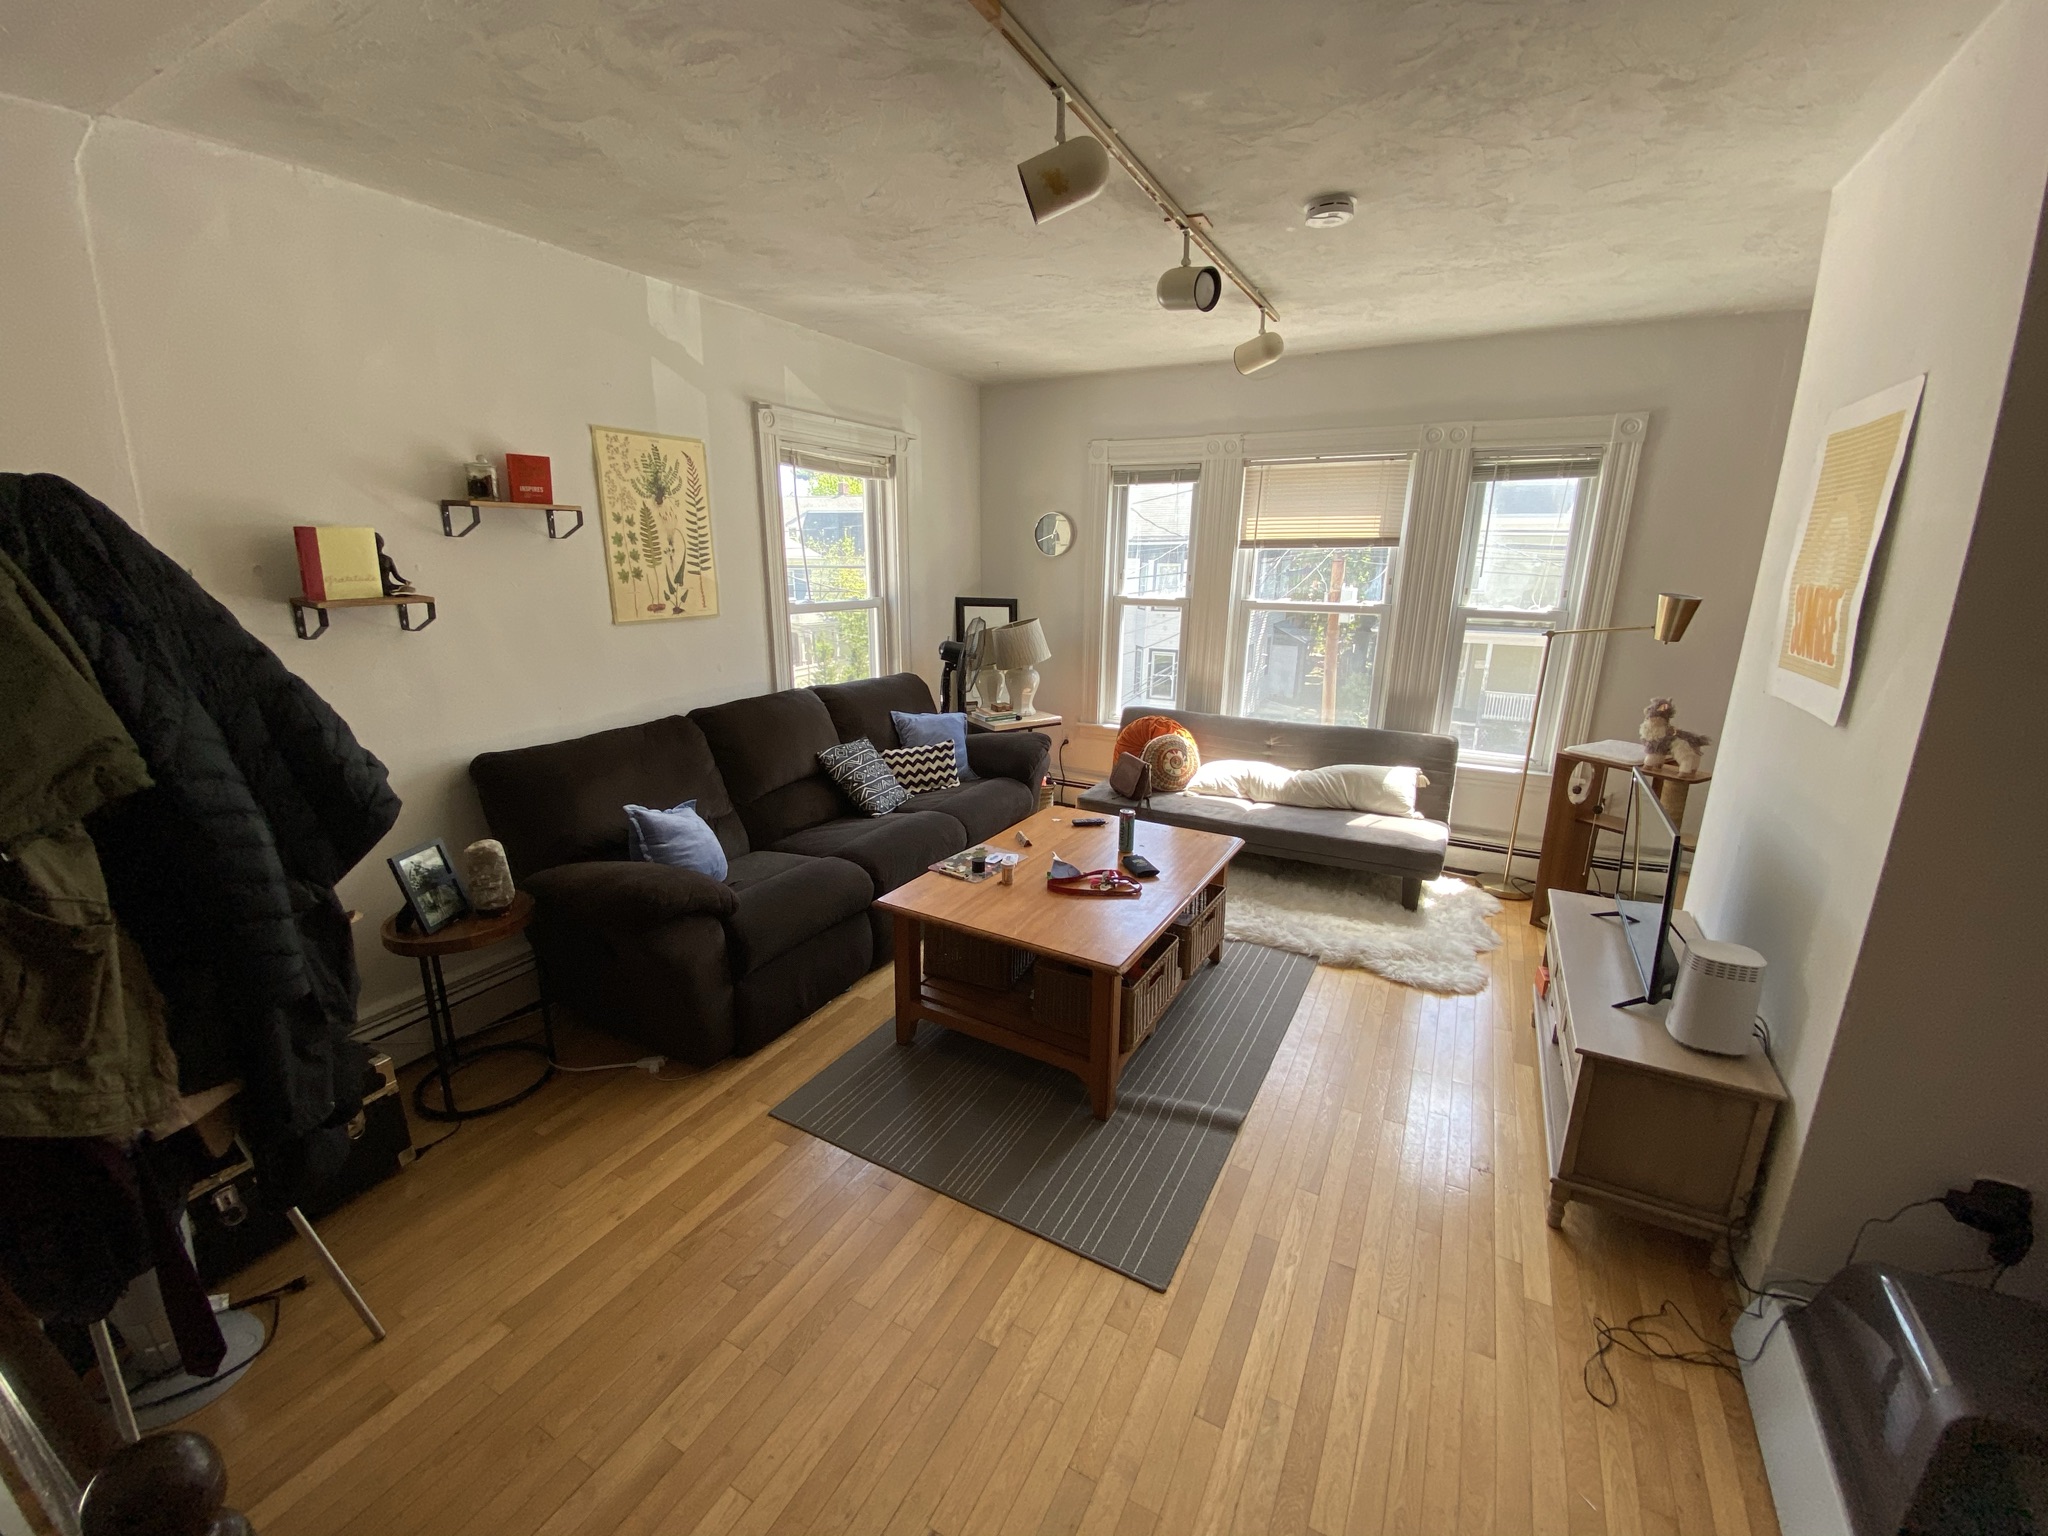 Photos of apartment on Murdock St.,Boston MA 02135